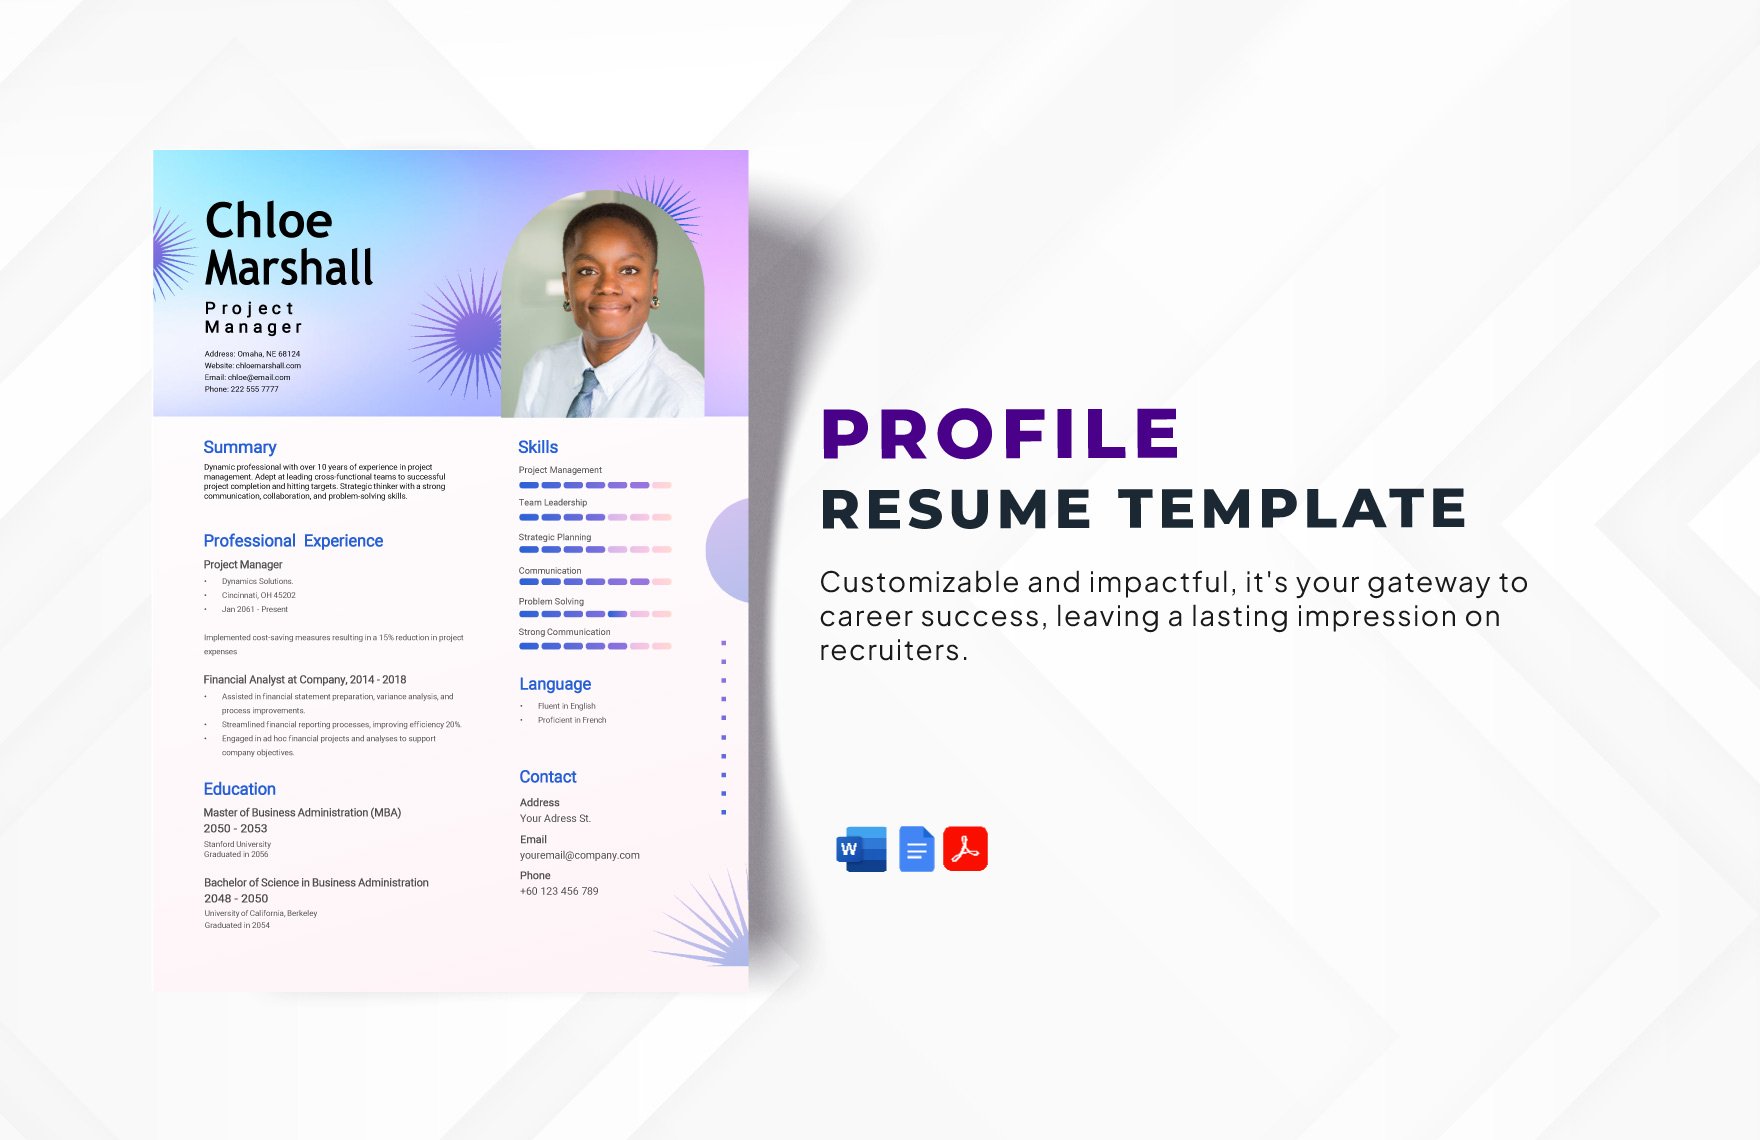 Profile Resume Template